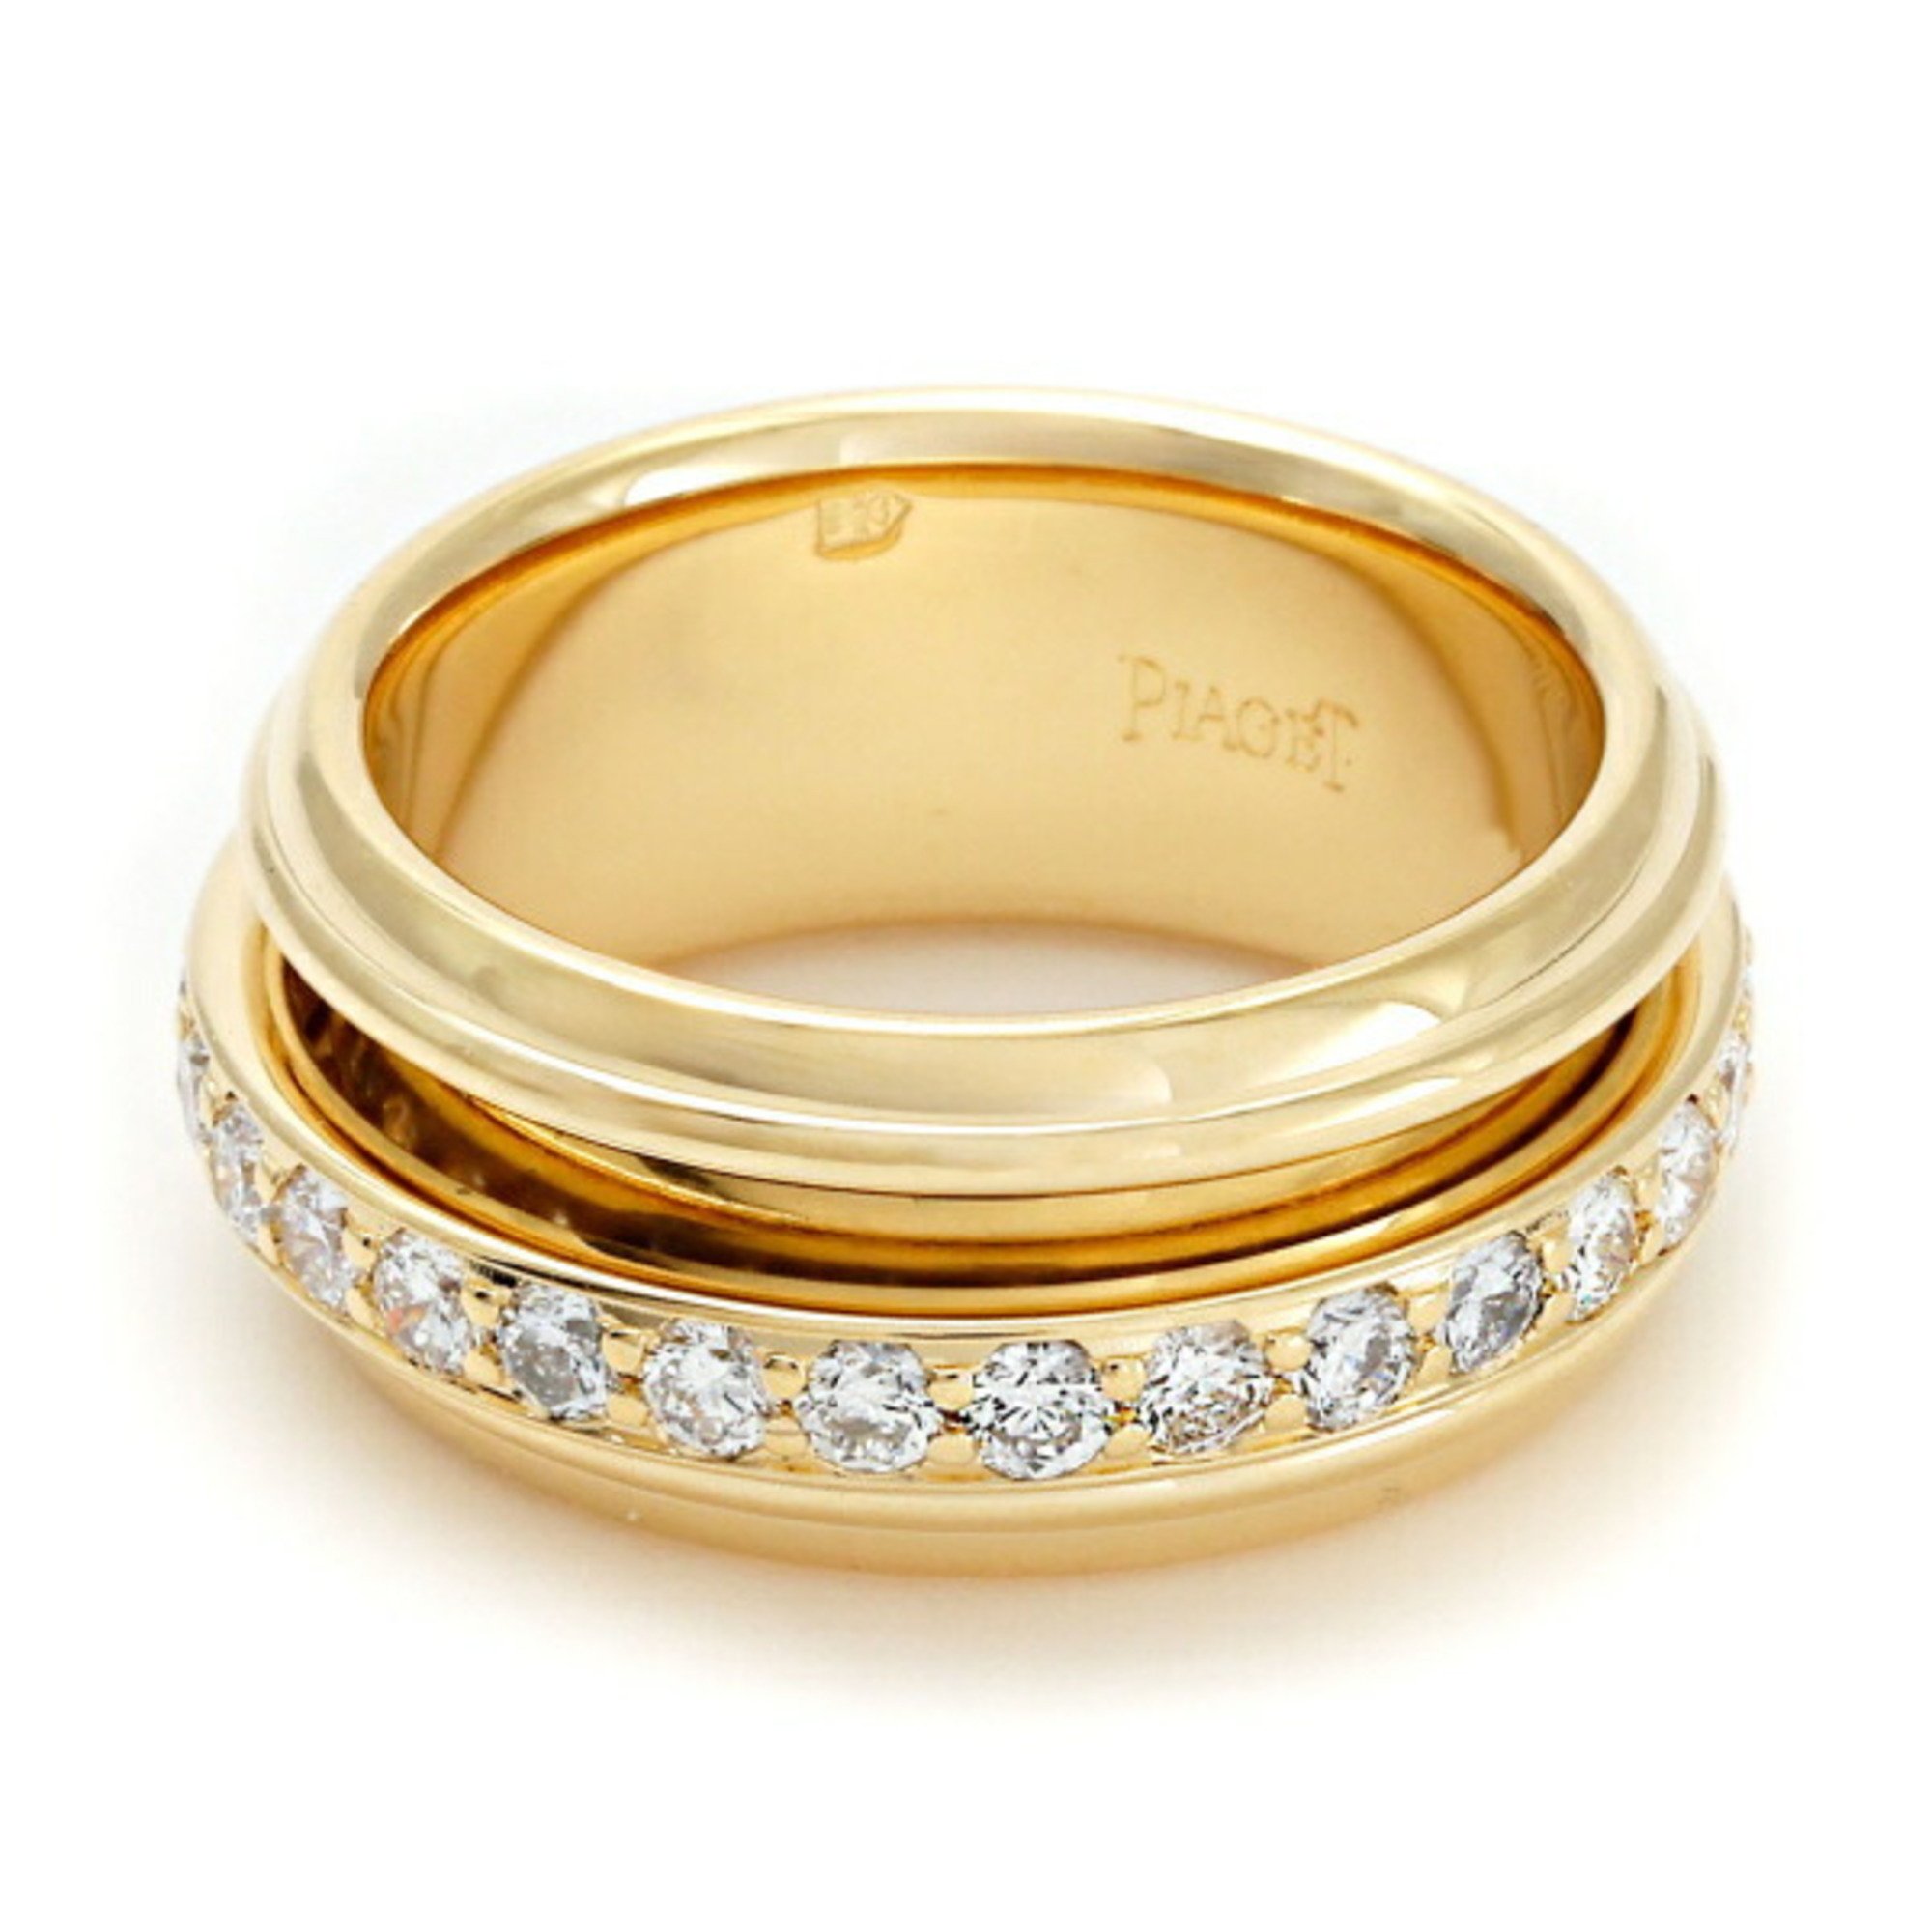 Piaget Possession 18K Yellow Gold Ring